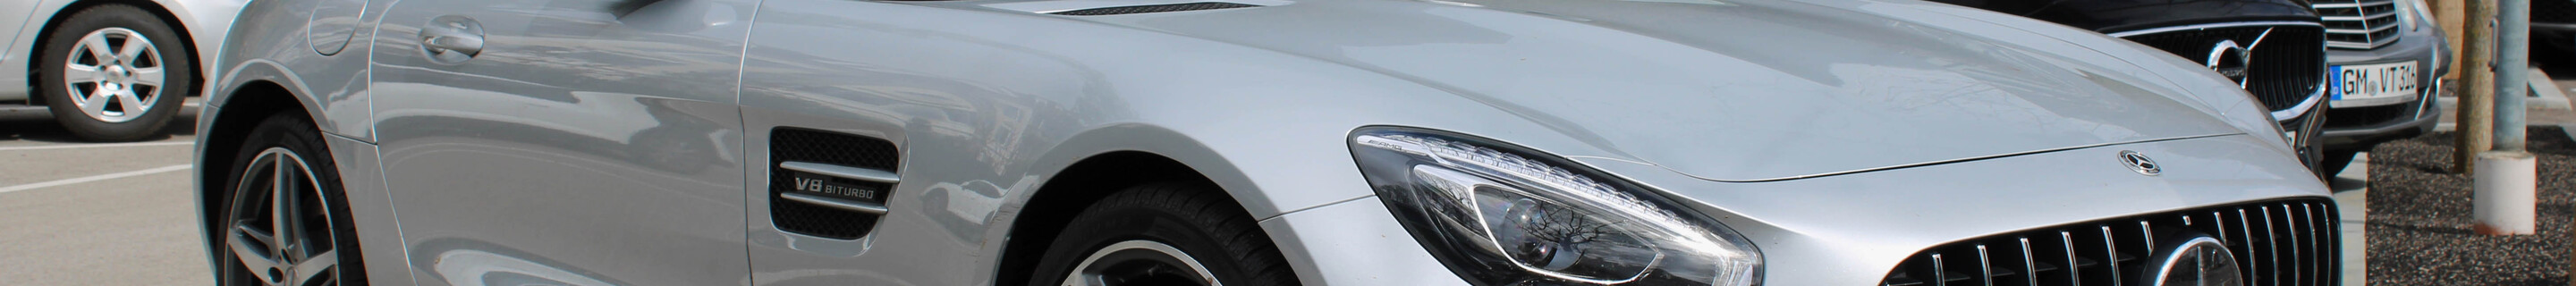 Mercedes-AMG GT C Roadster R190